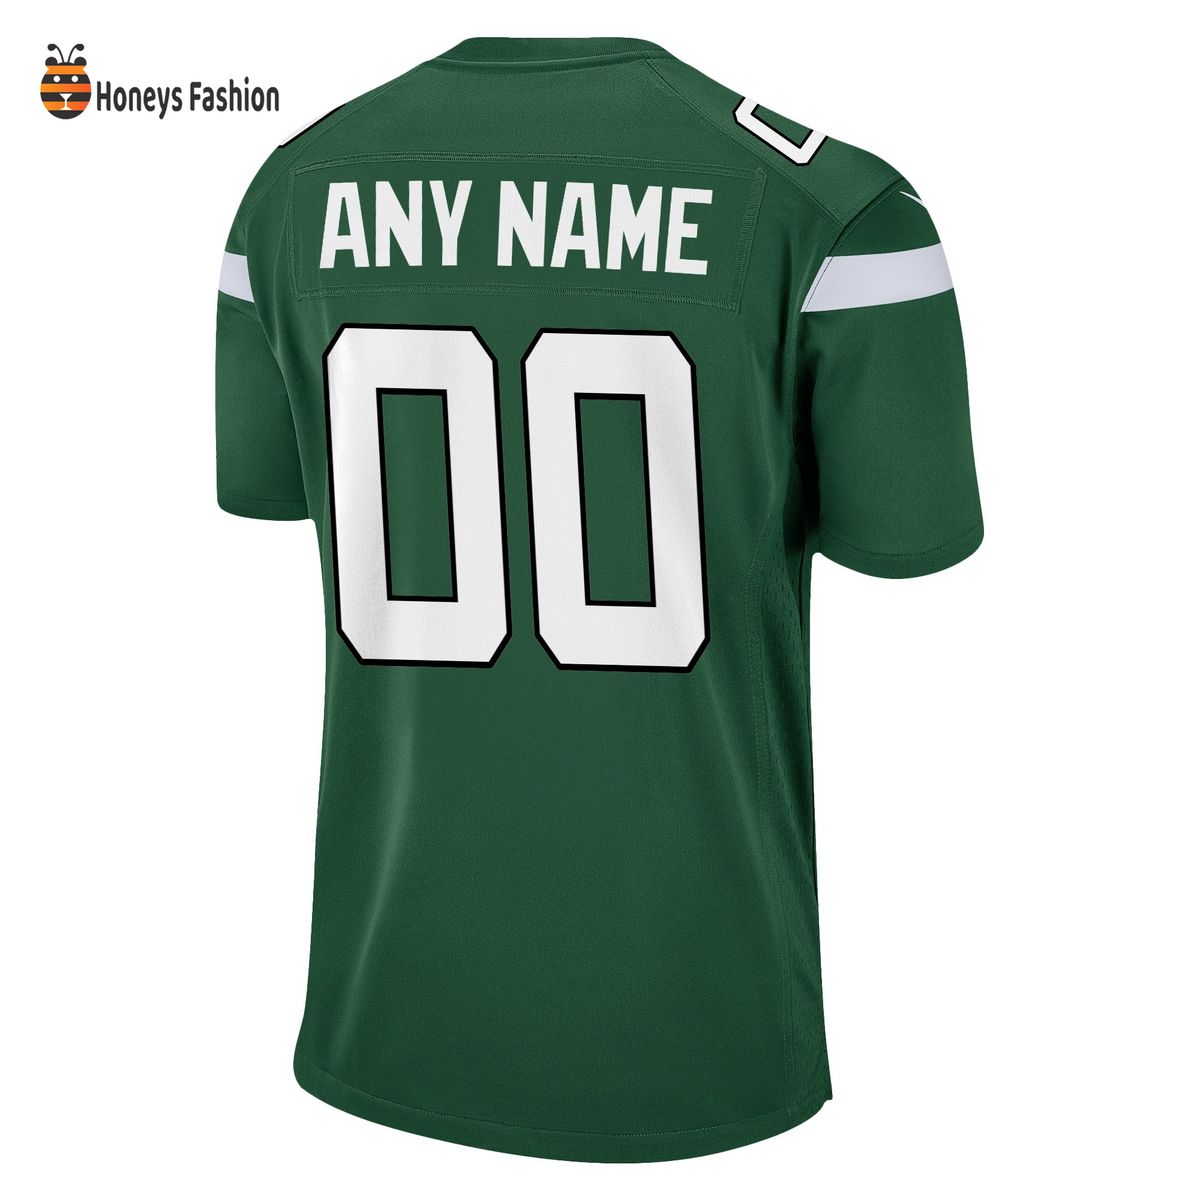 New York Jets Nike Game Custom Gotham Green Jersey